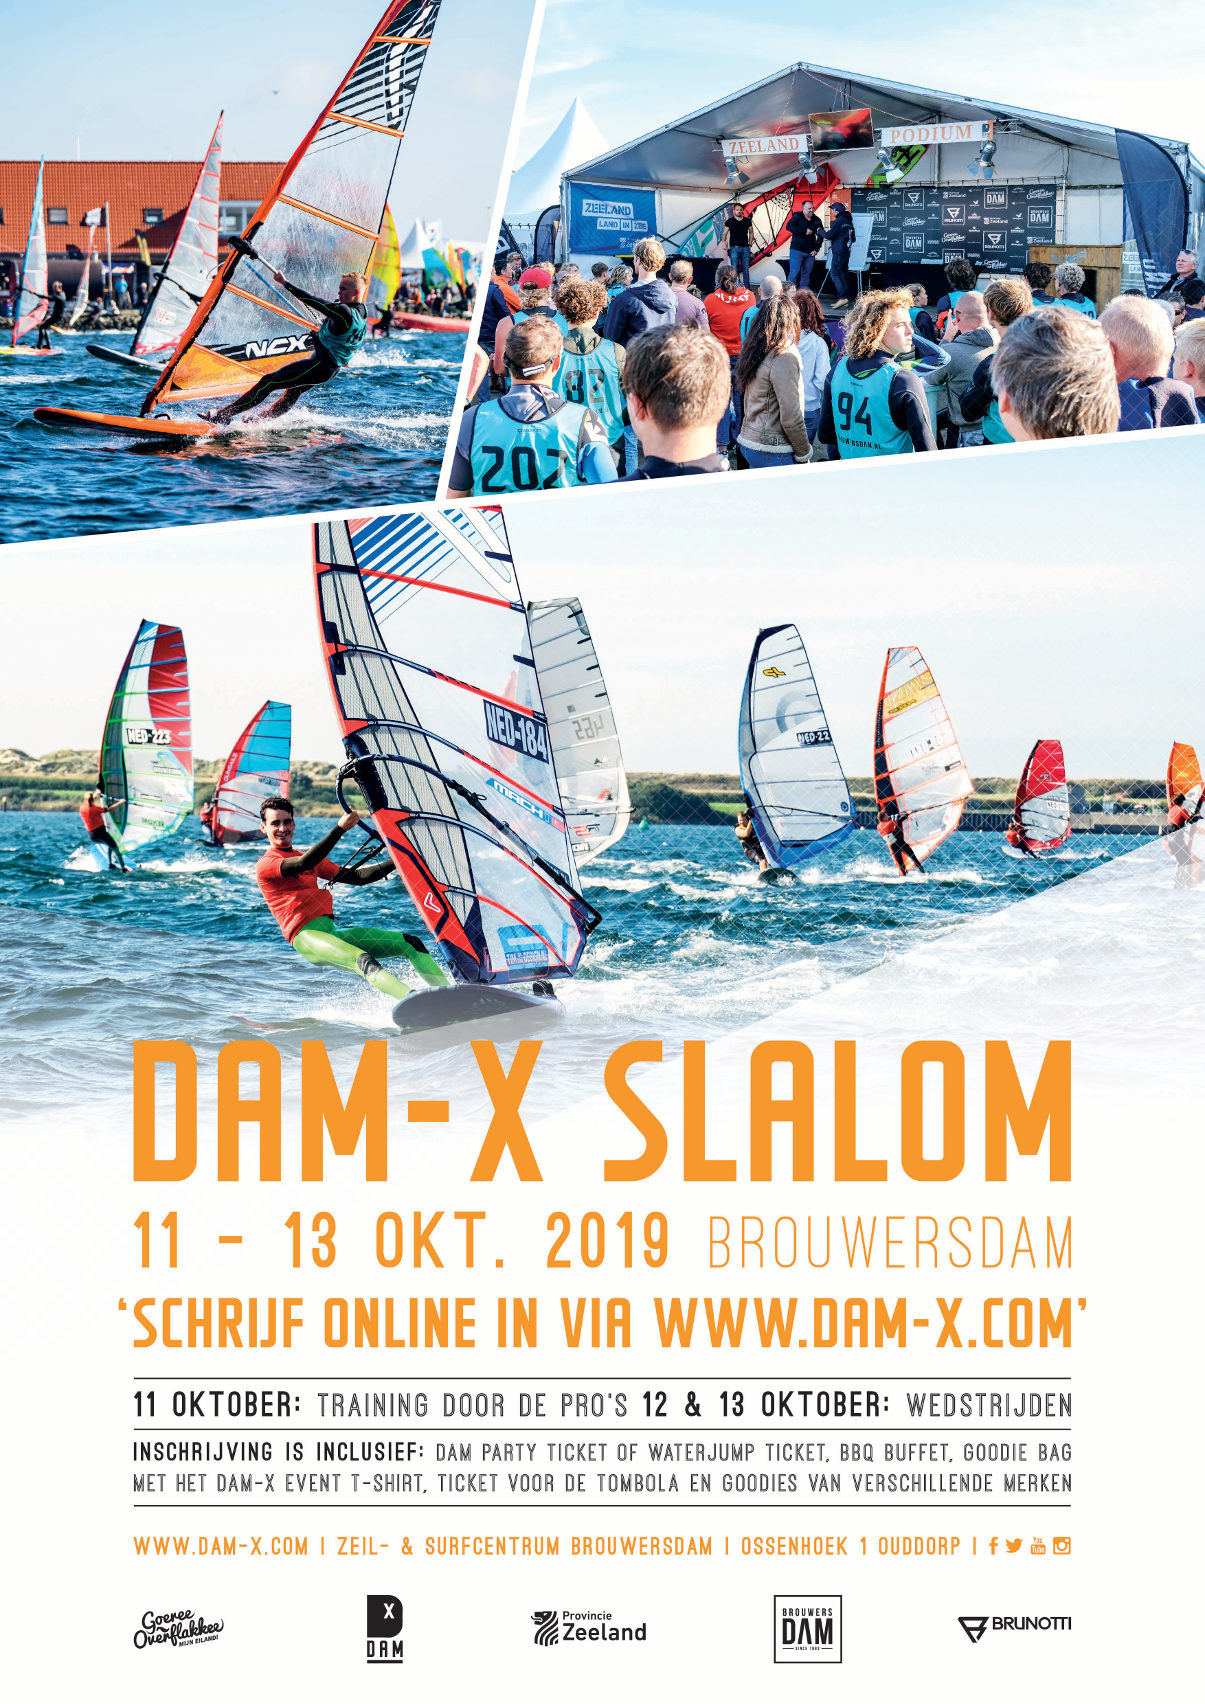 dam-x slalom